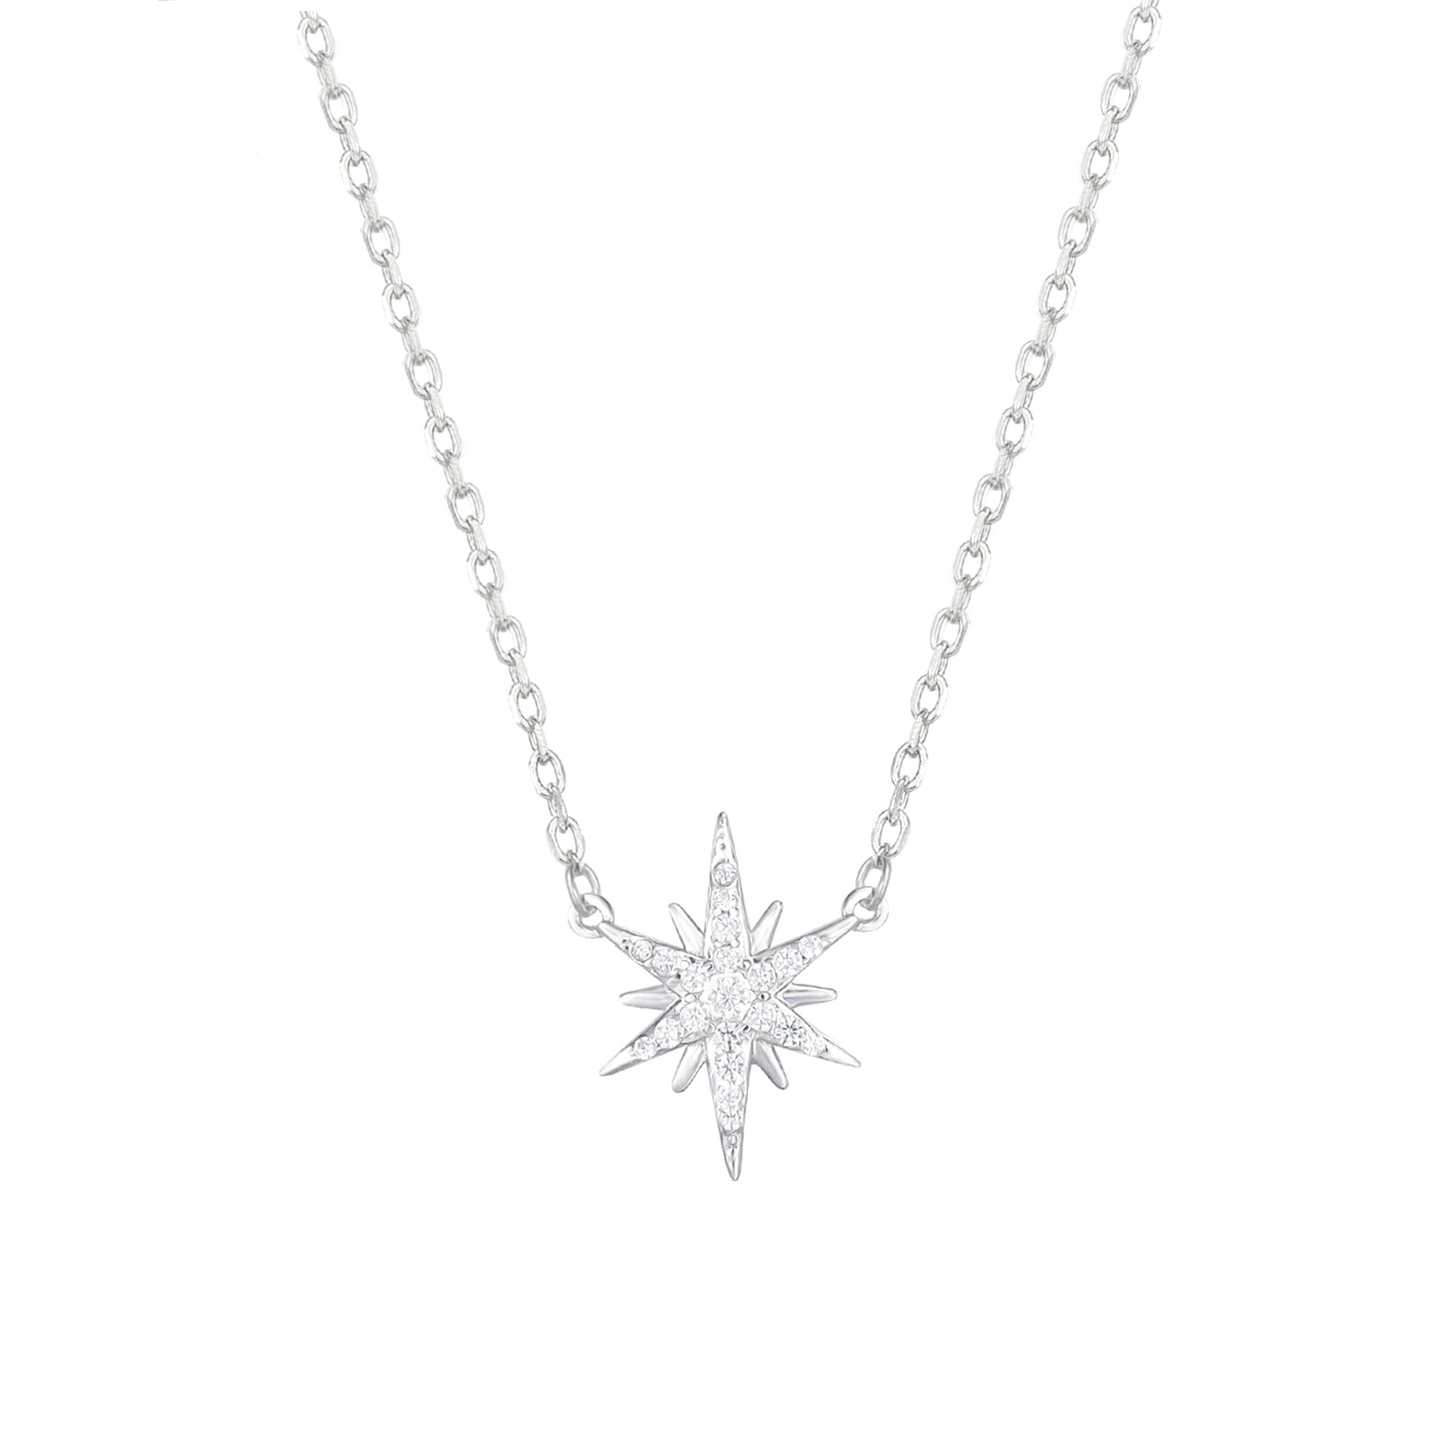 Sterling Silver Rhodium-Plated Sunburst Necklace with CZ Paved Star Charm - sugarkittenlondon